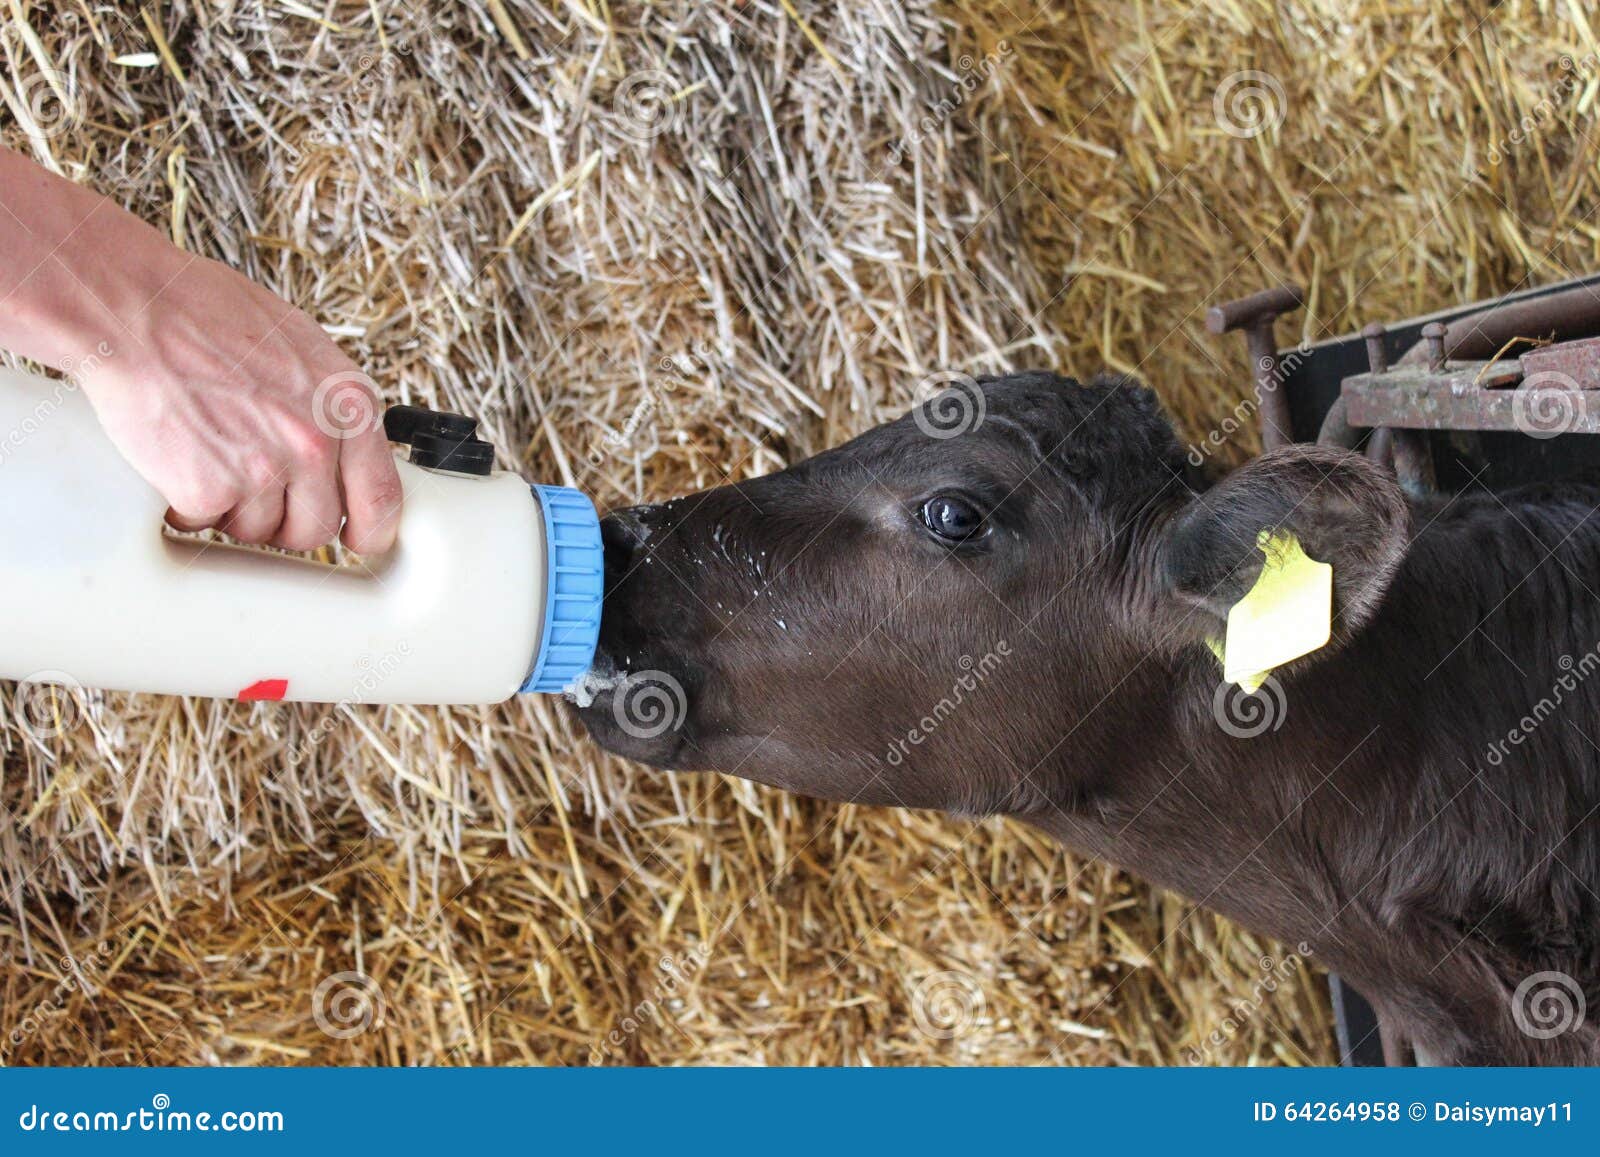 feeding orphan baby calf